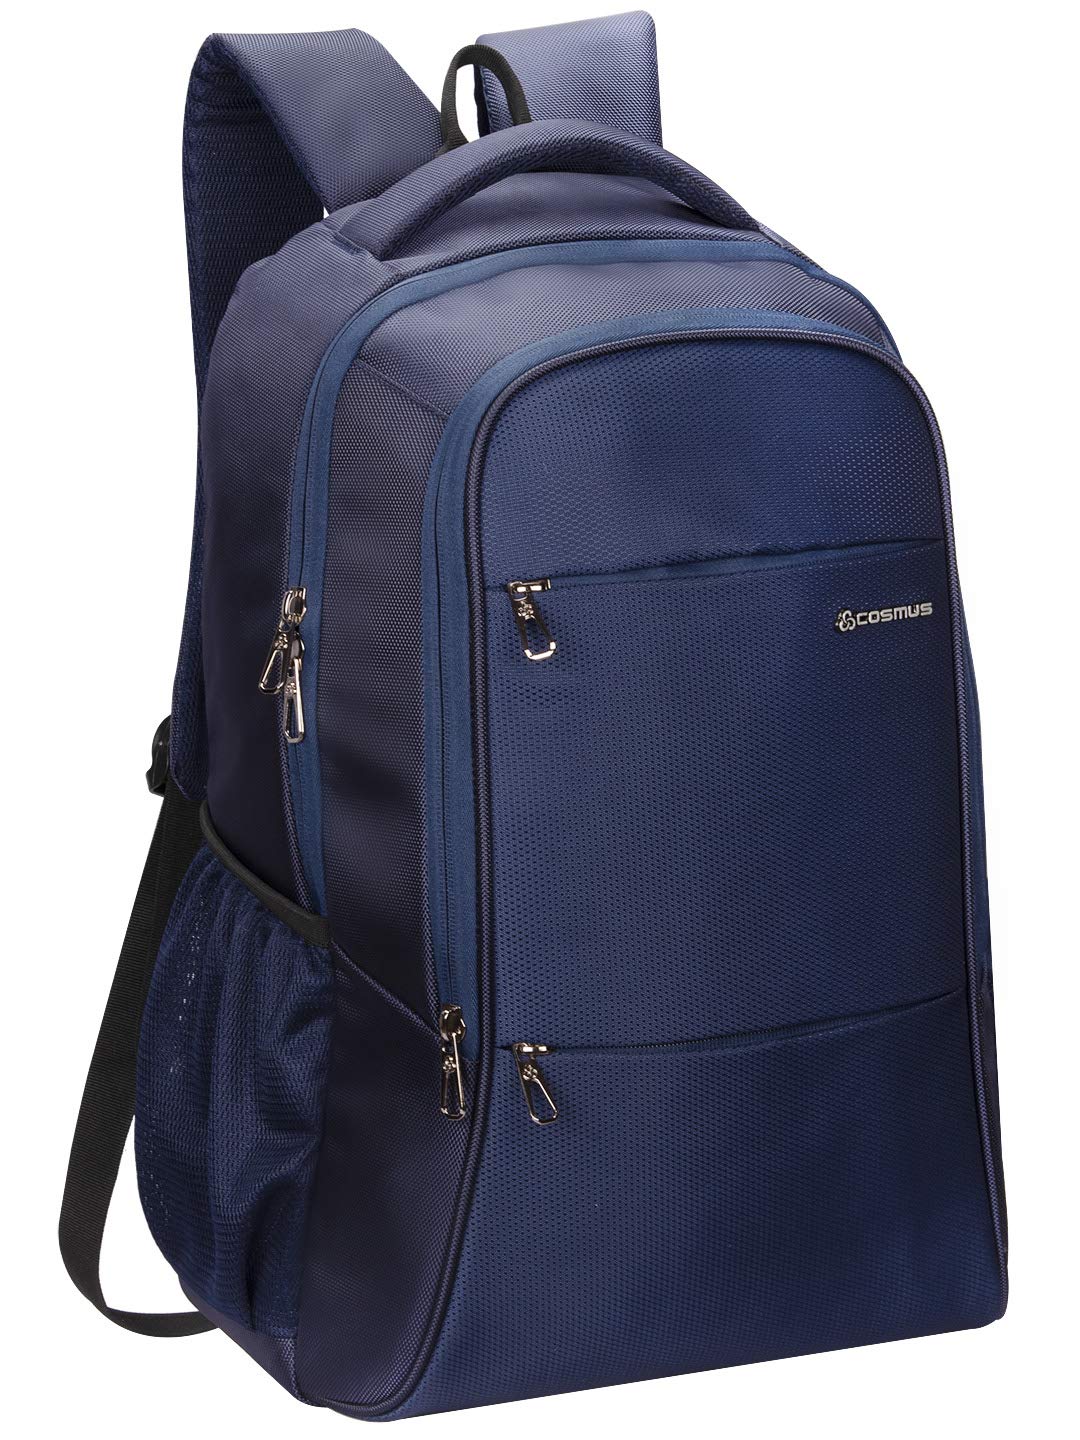 cosmus-laptop-backpack